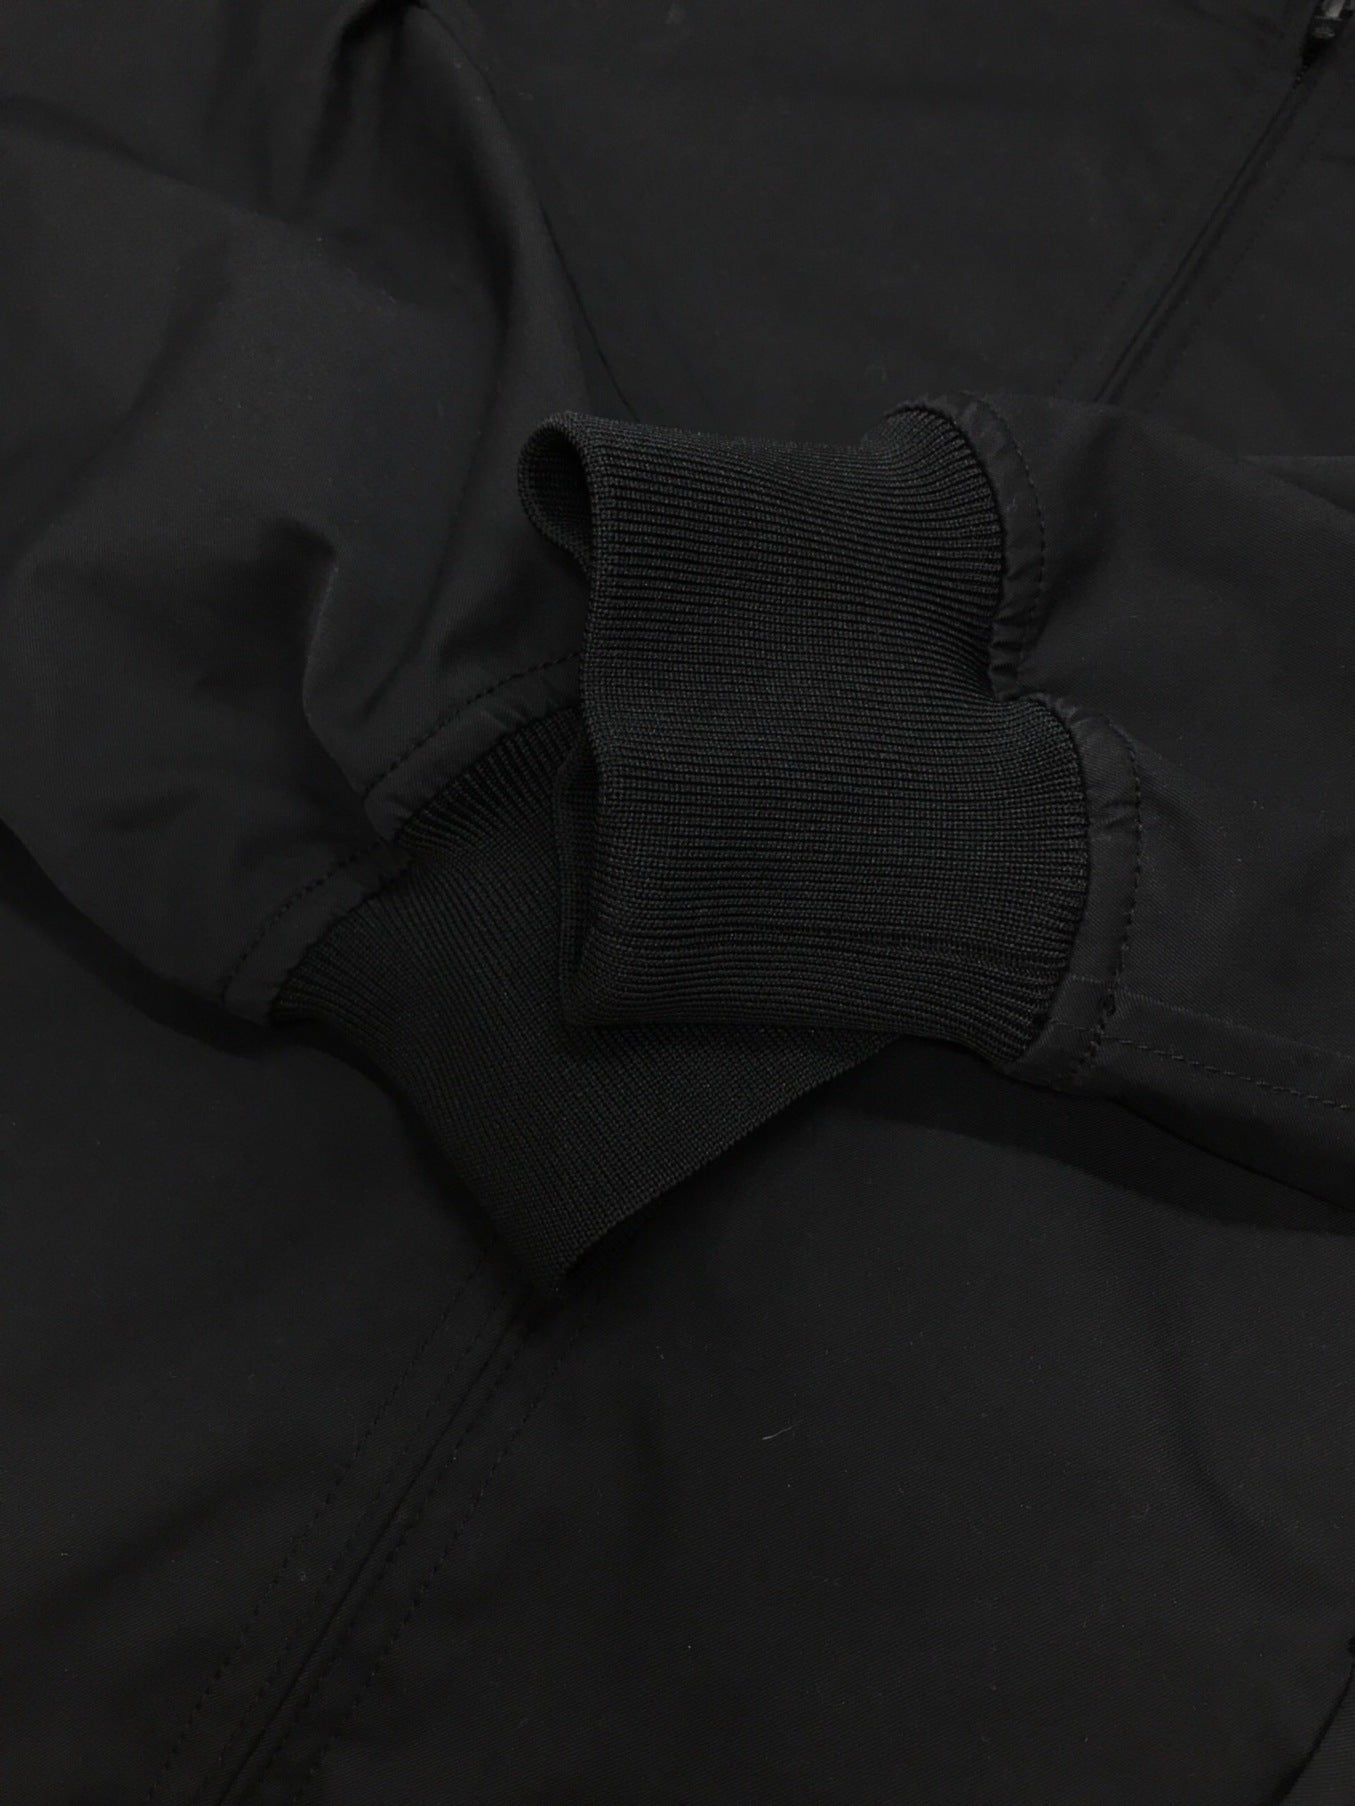 DAIWA PIER39 BY special order SWING JKT/swing jacket/zip-up/high neck/blouson/outer/raglan sleeve